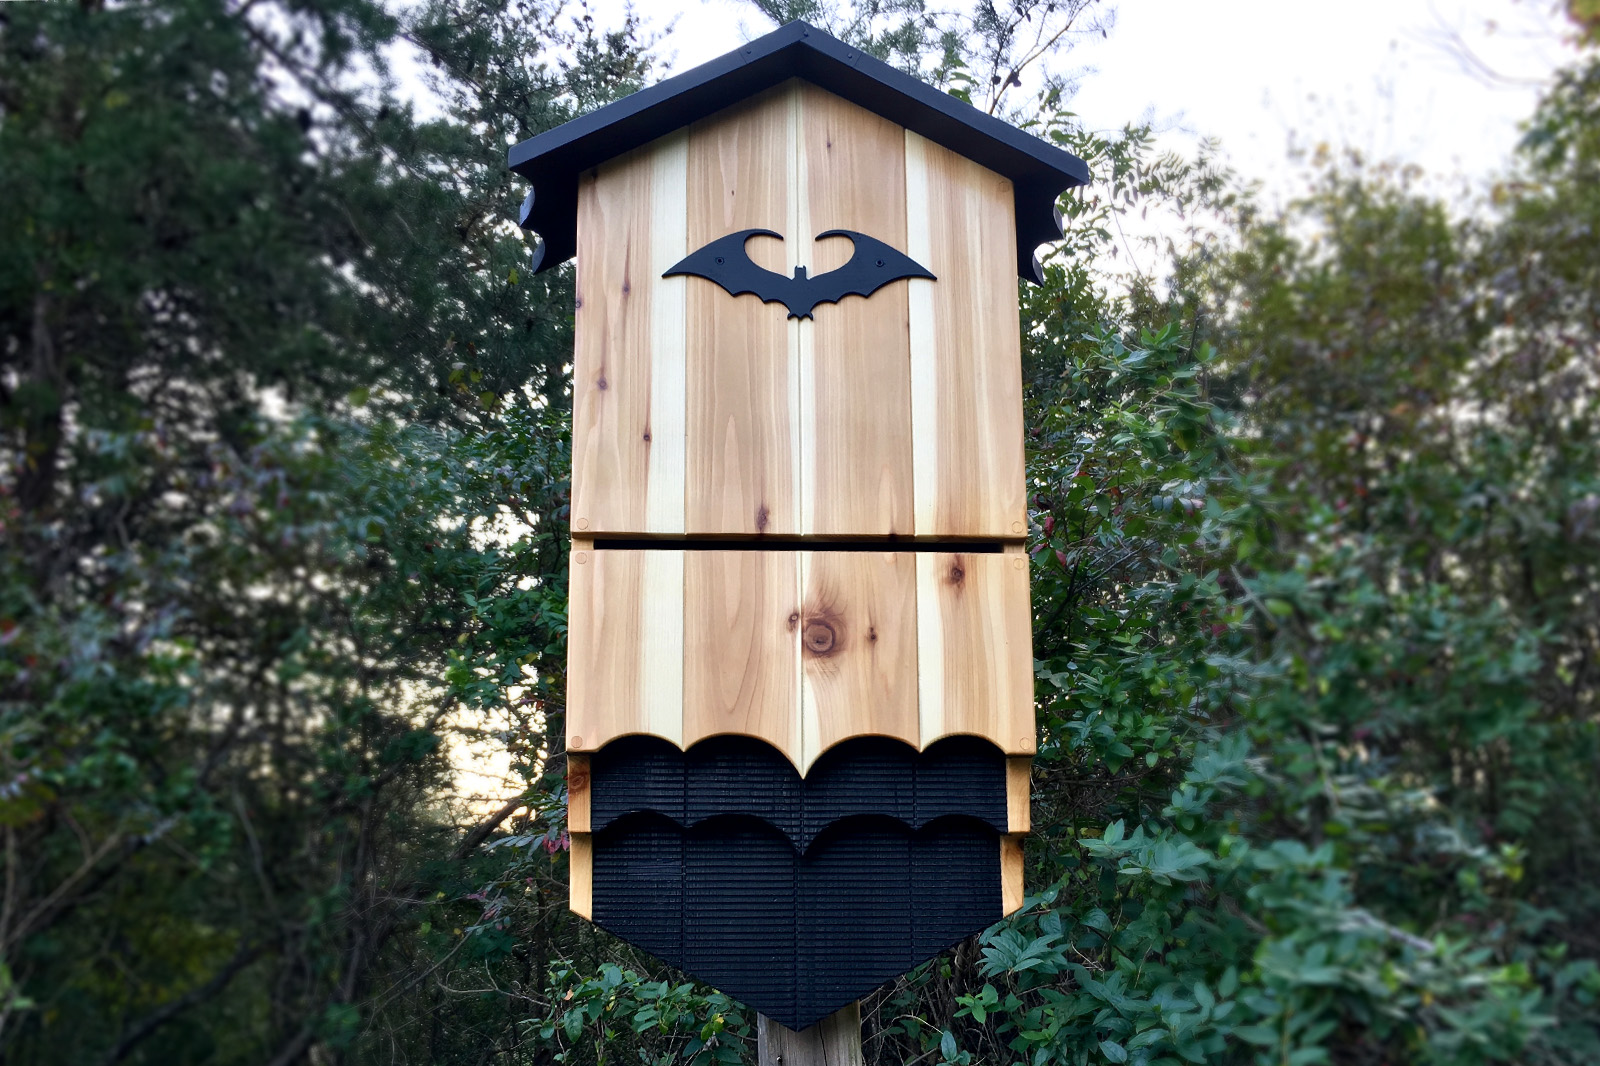 The Bat House